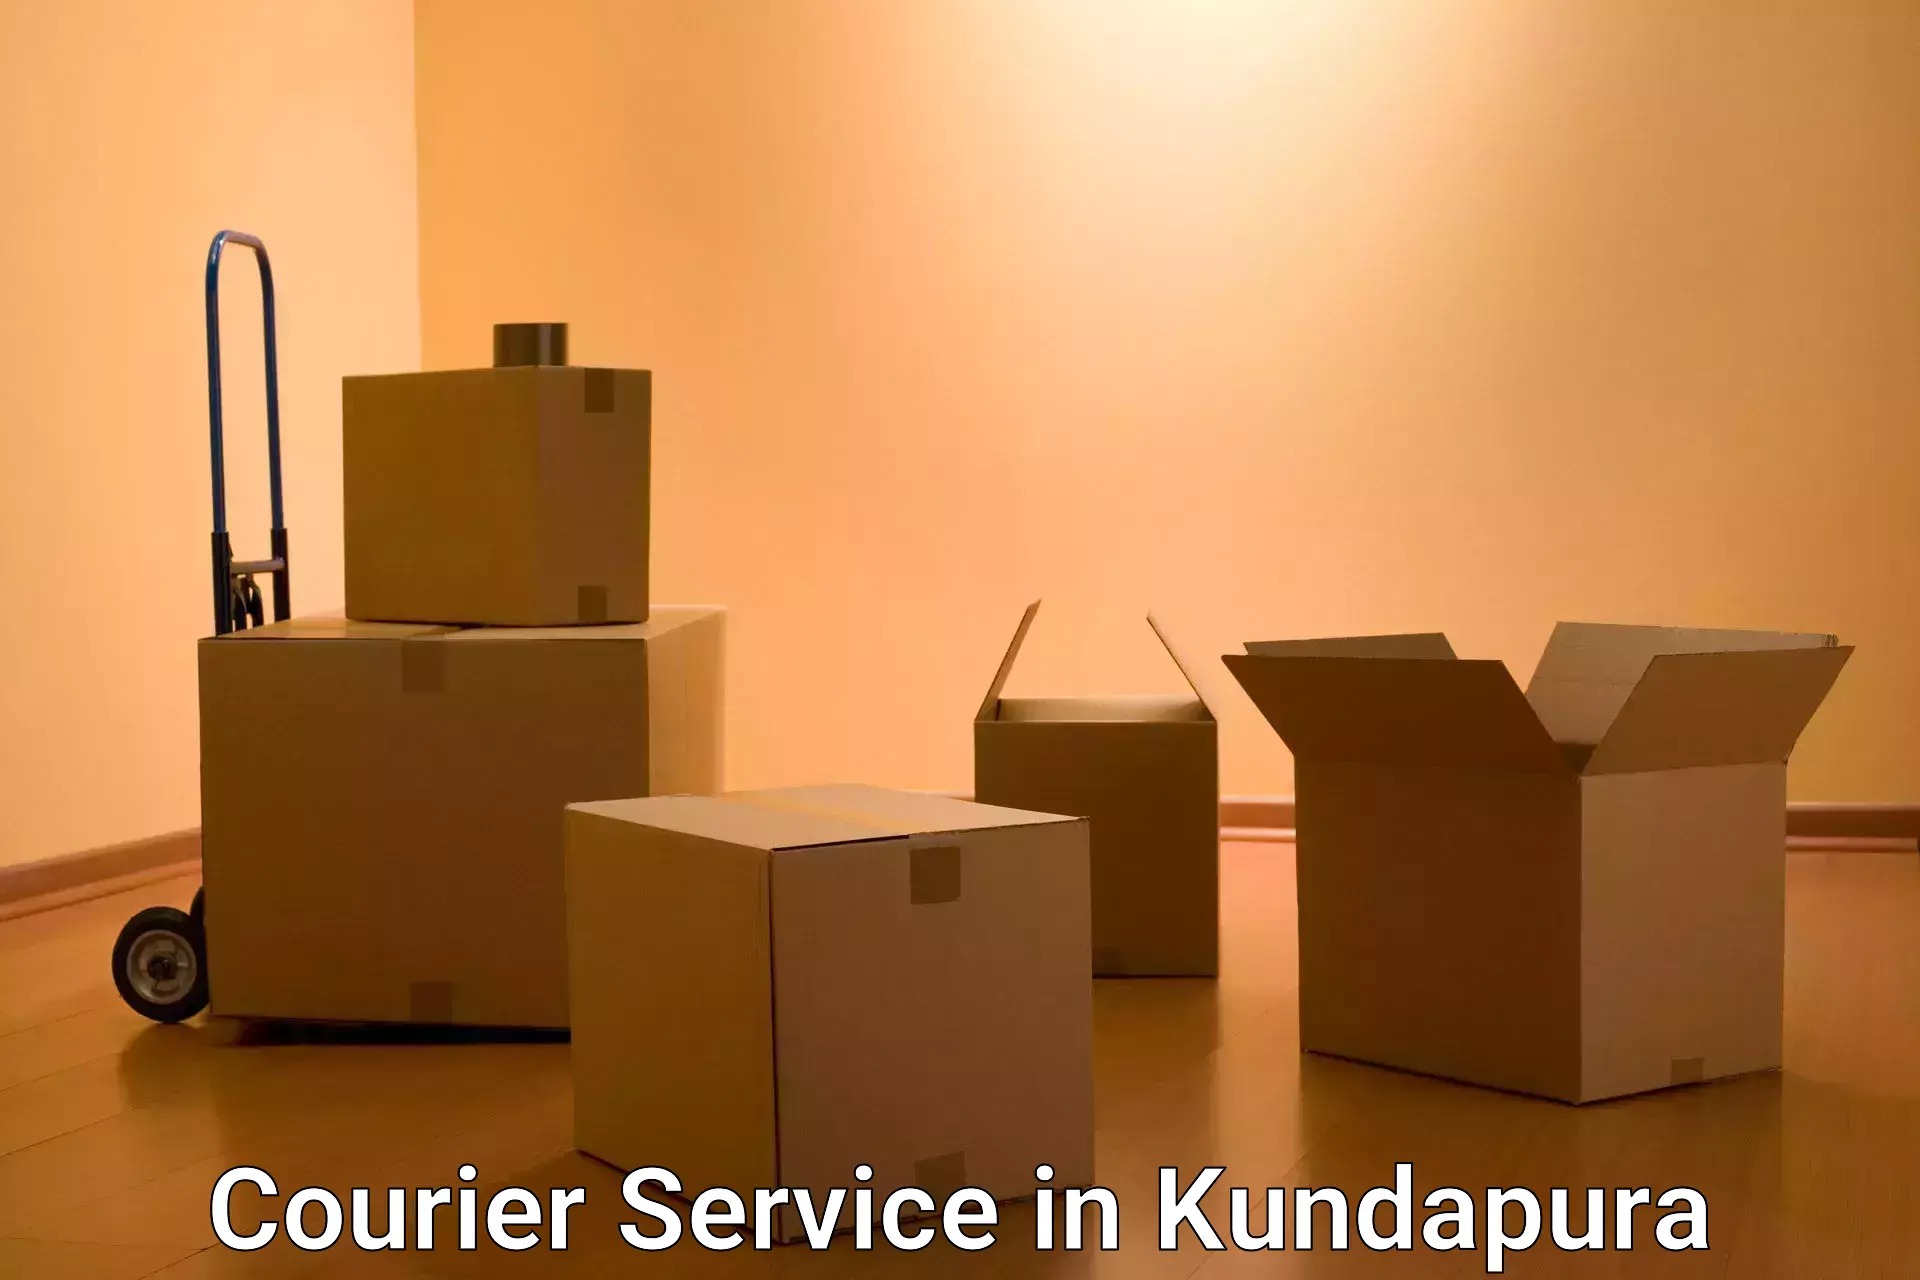 User-friendly delivery service in Kundapura